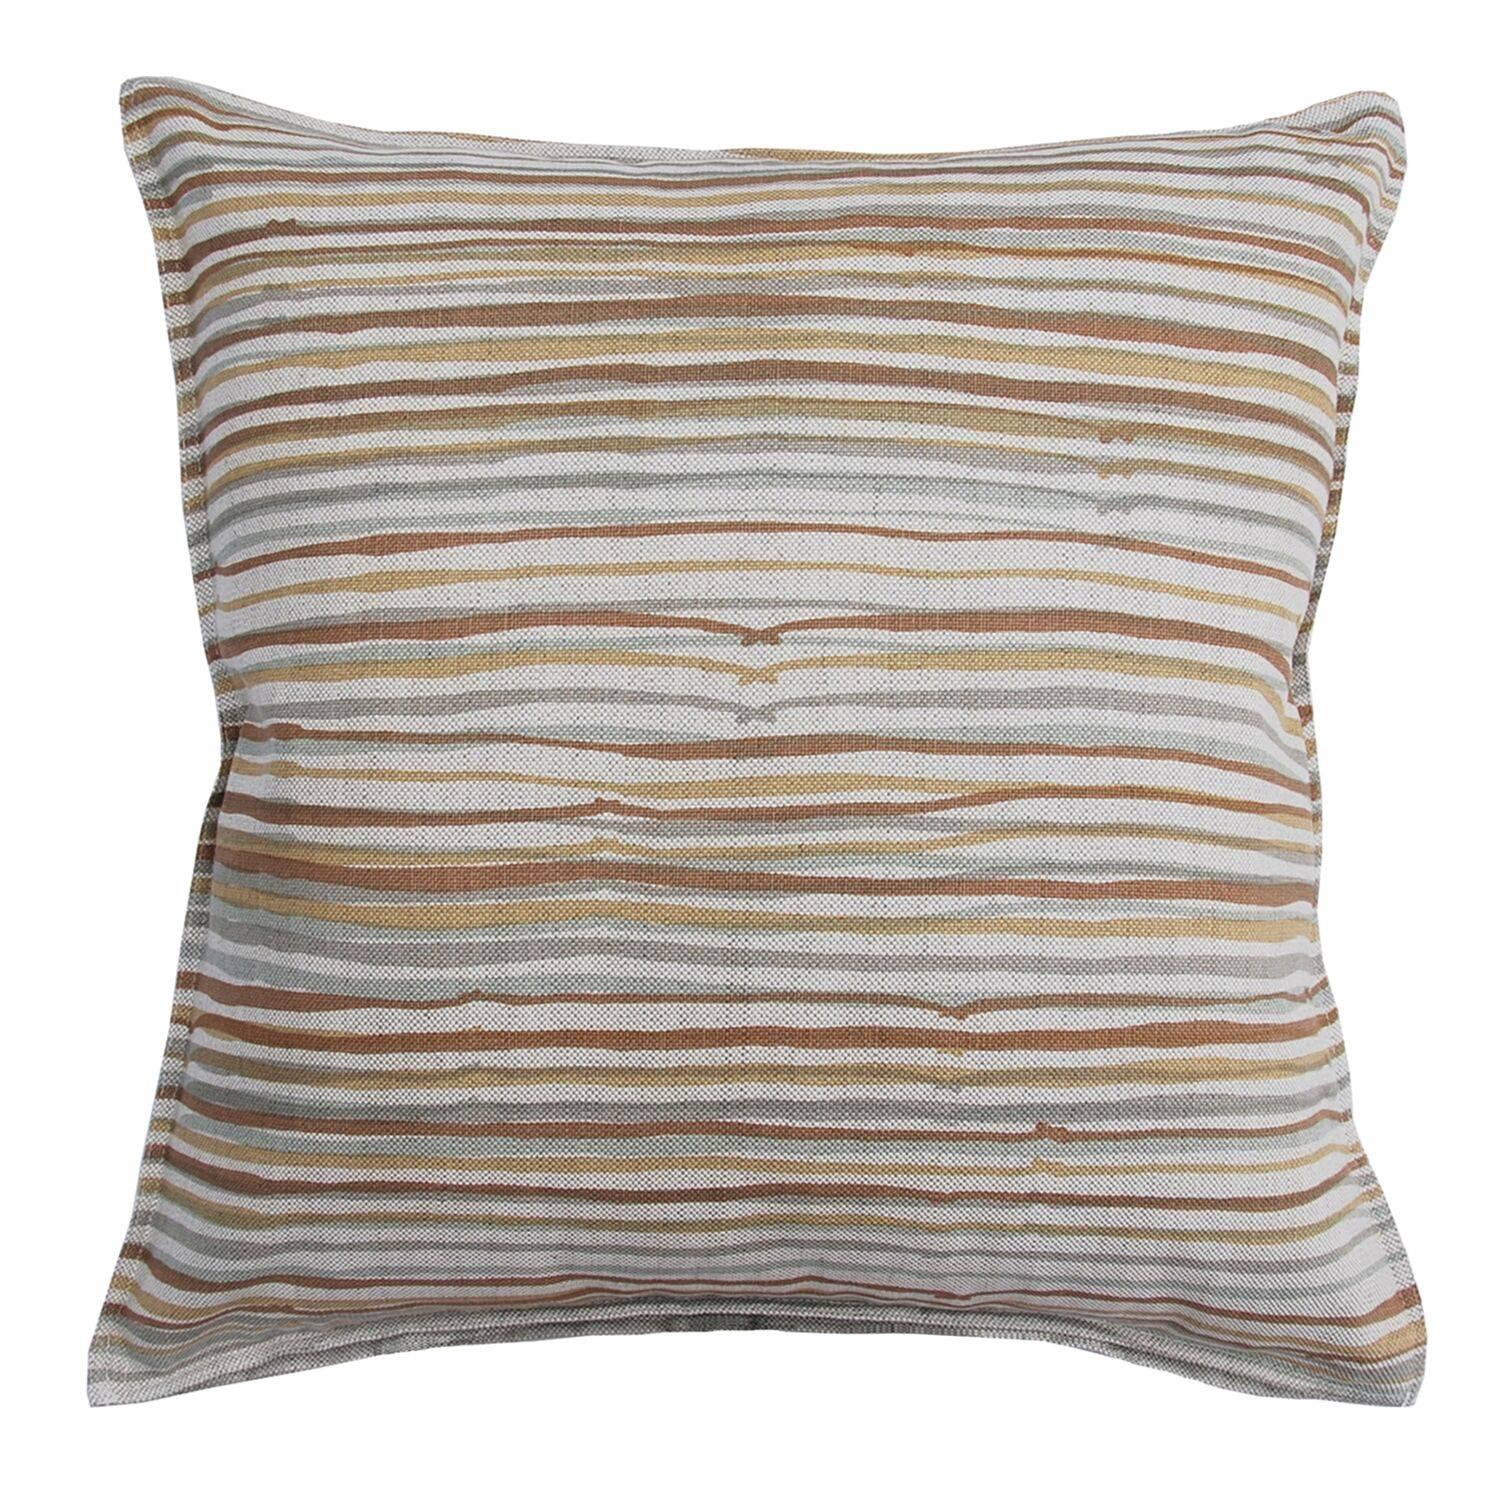 Desert Stripe on Wheat Cotton Linen Pillow For Sale